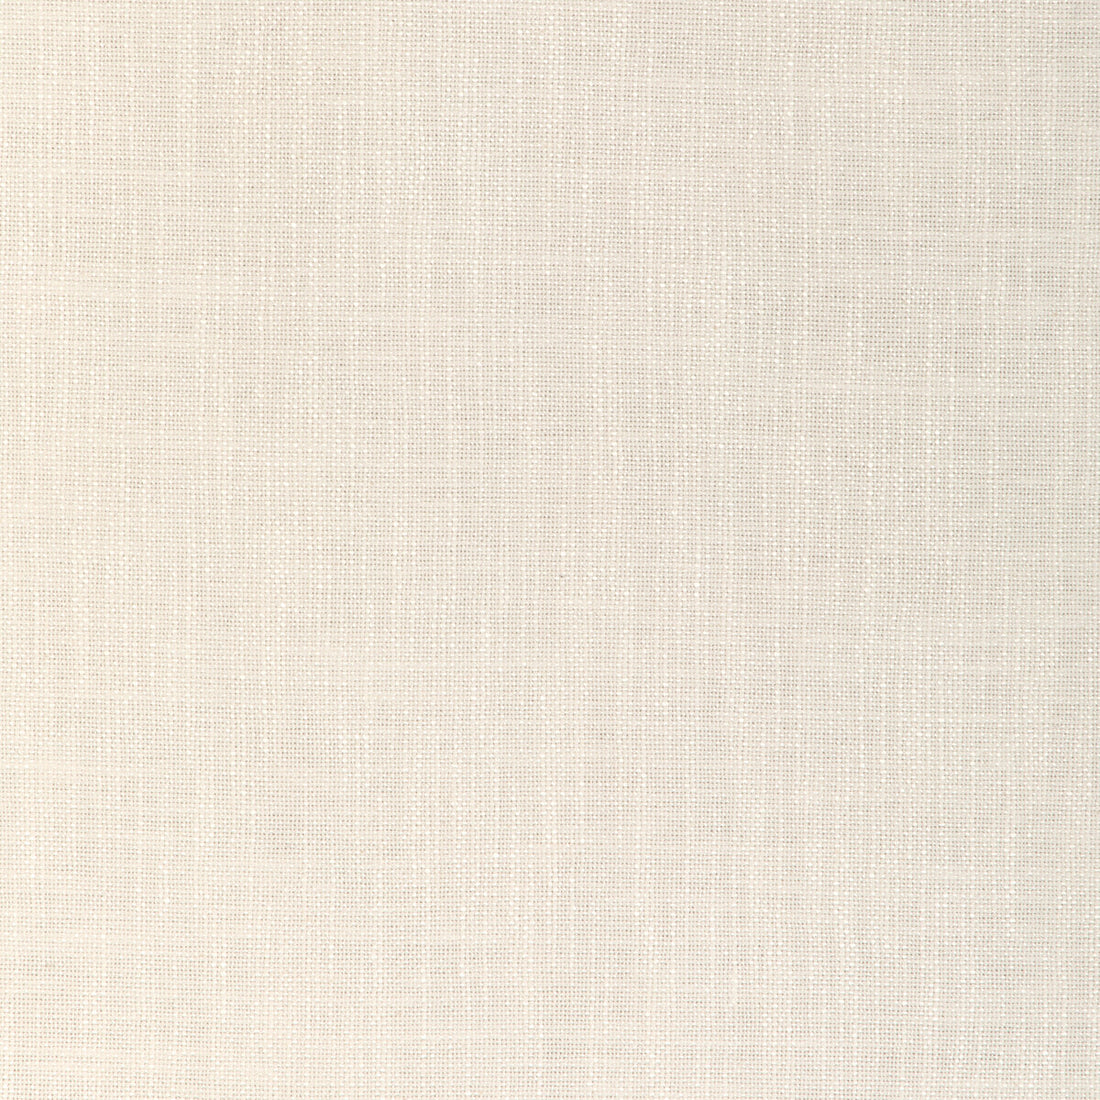 Kravet Smart fabric in 36672-1 color - pattern 36672.1.0 - by Kravet Smart in the Performance Kravetarmor collection